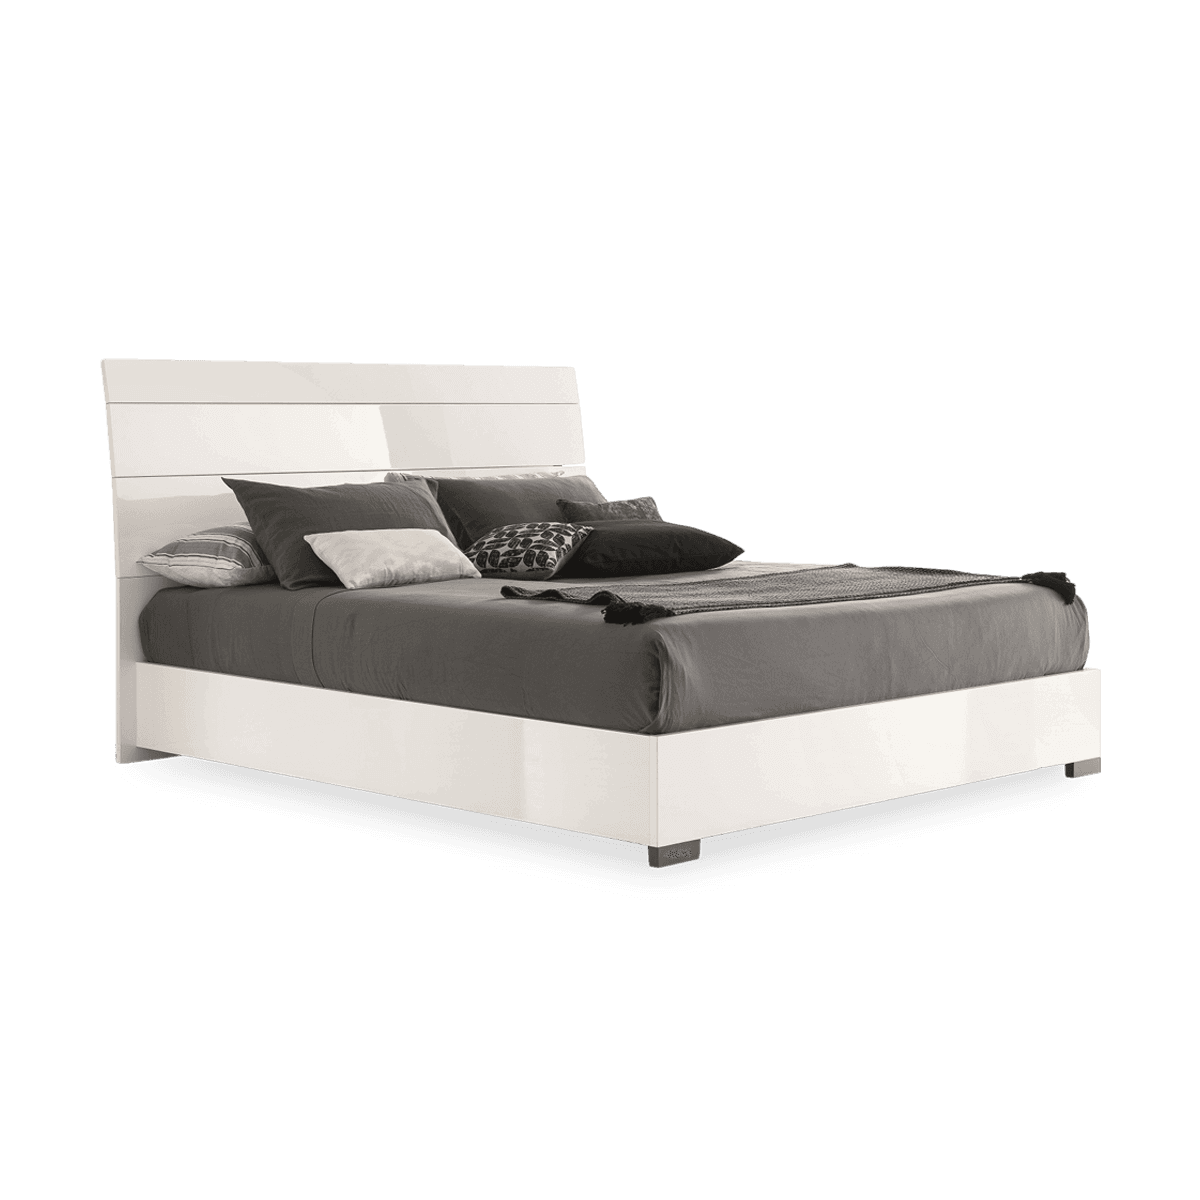 Costa Blanca Ks Bed - White High Gloss